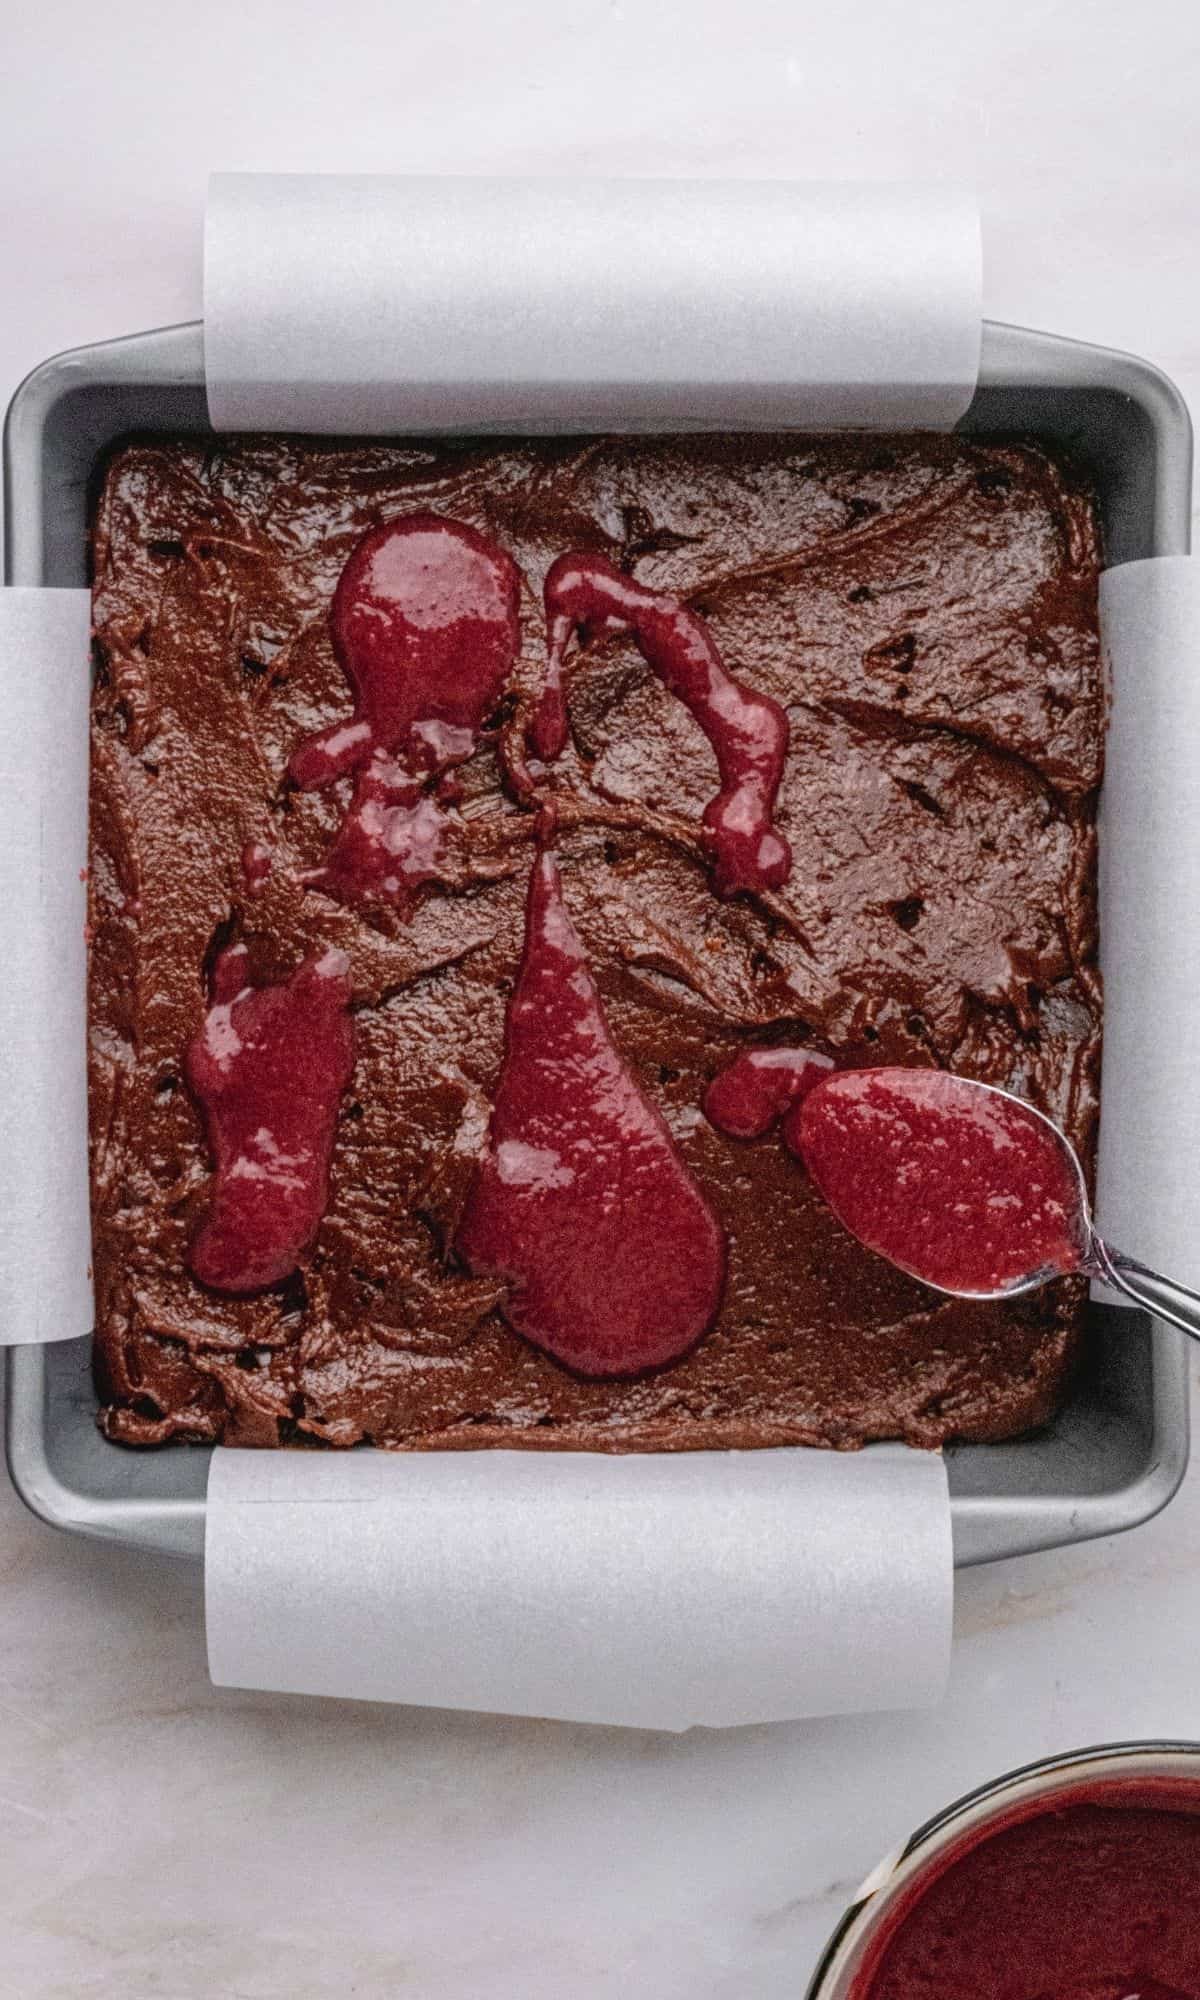 Chocolate raspberry brownies preparation.